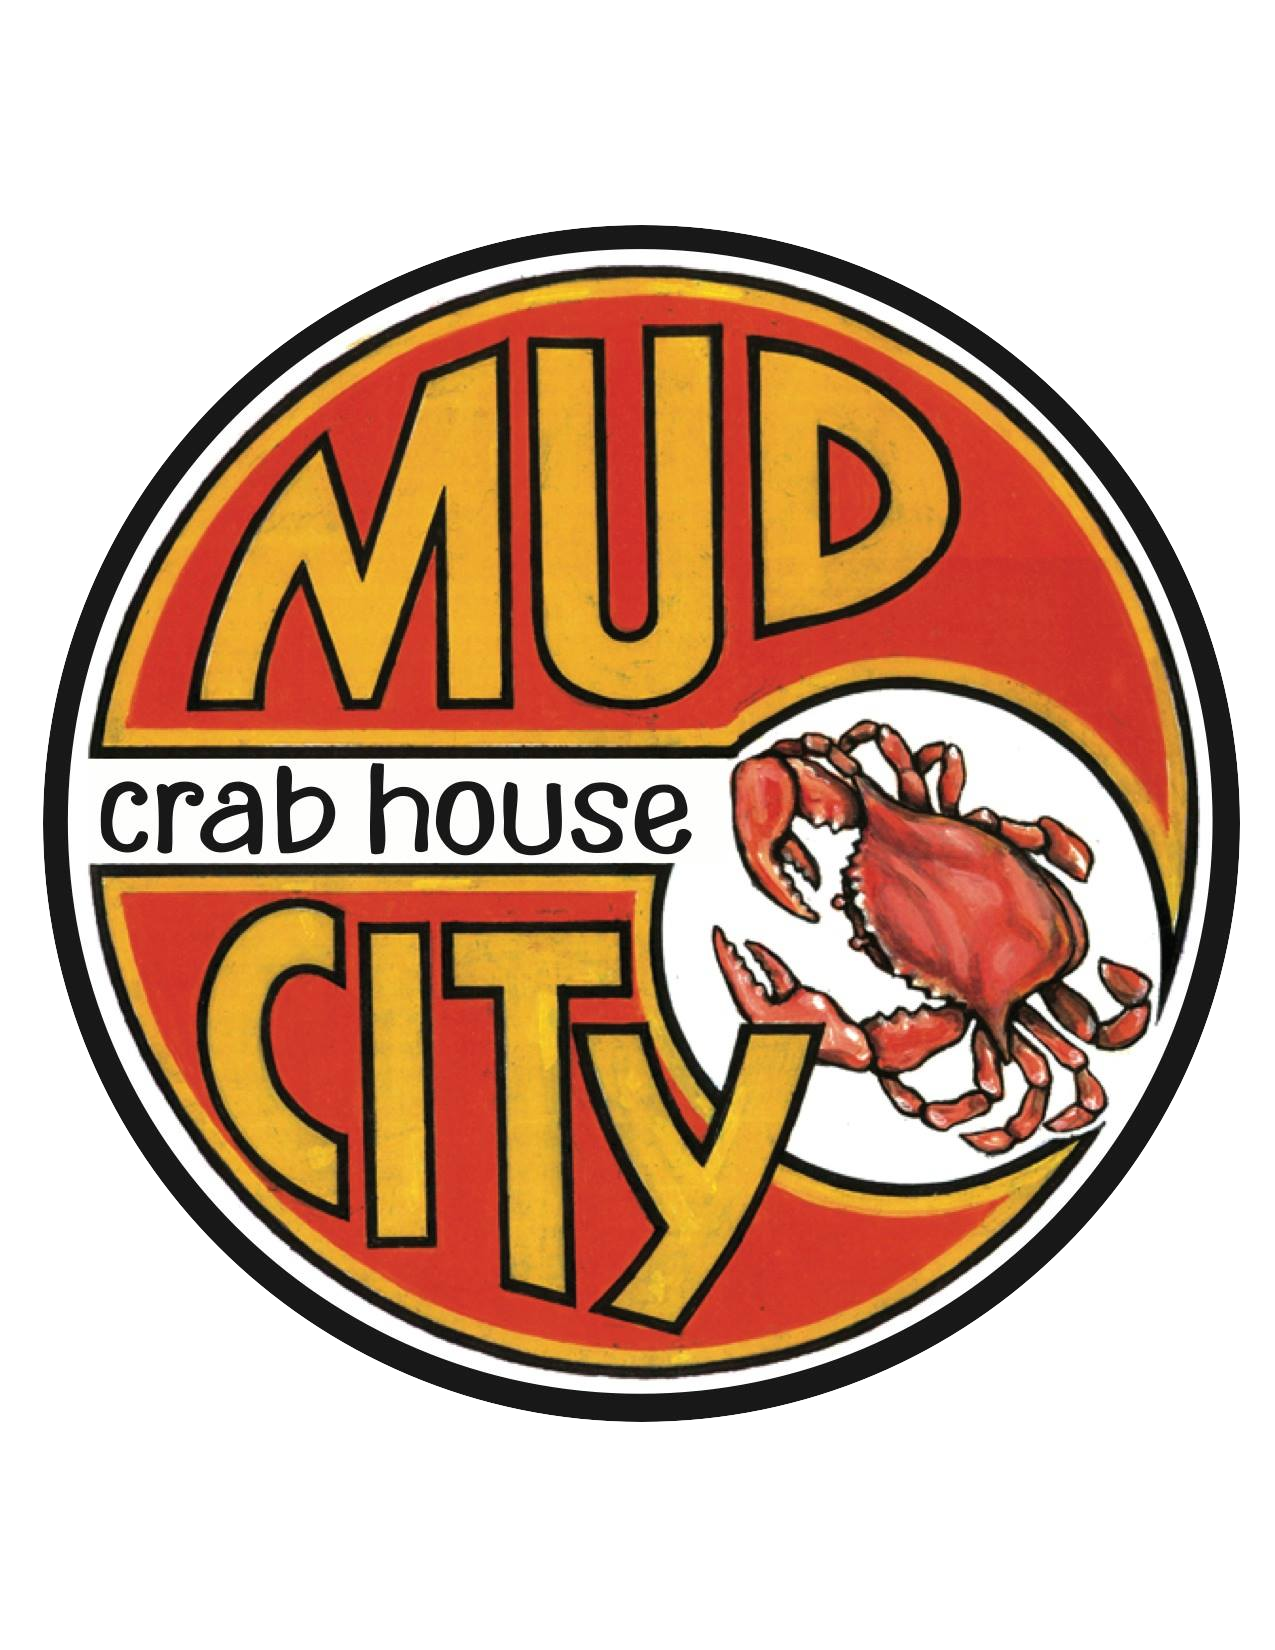 Mud City Crabhouse